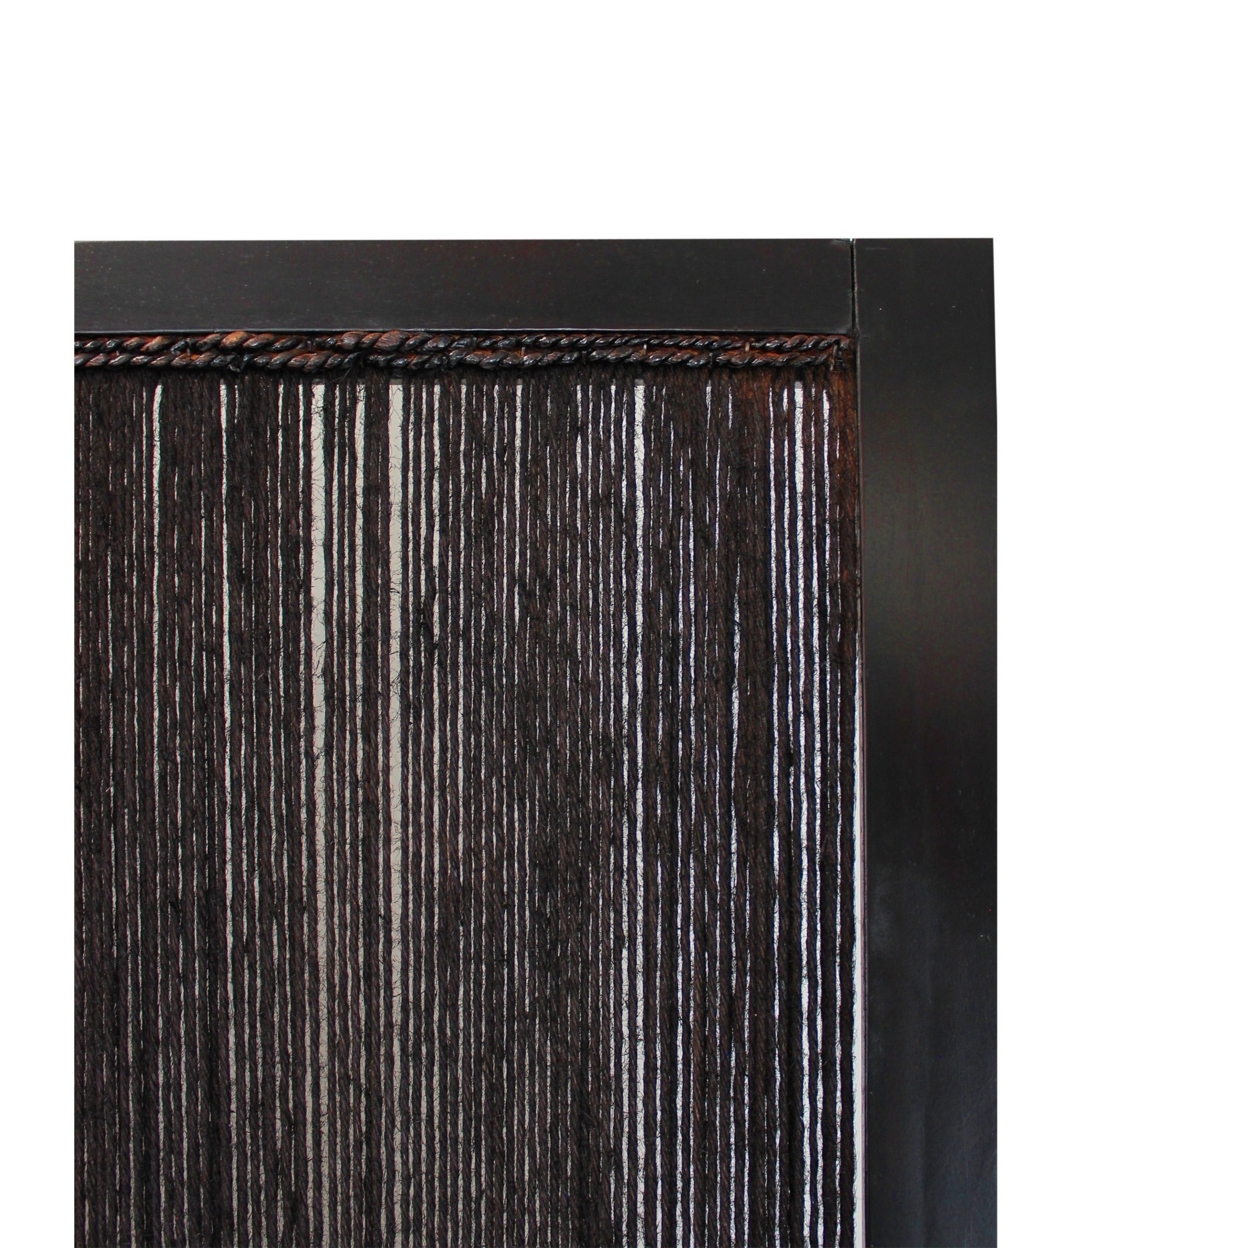 Yetta 72 X 72 Indoor Outdoor Folding Screen Room Divider, Handmade, Brown- Saltoro Sherpi